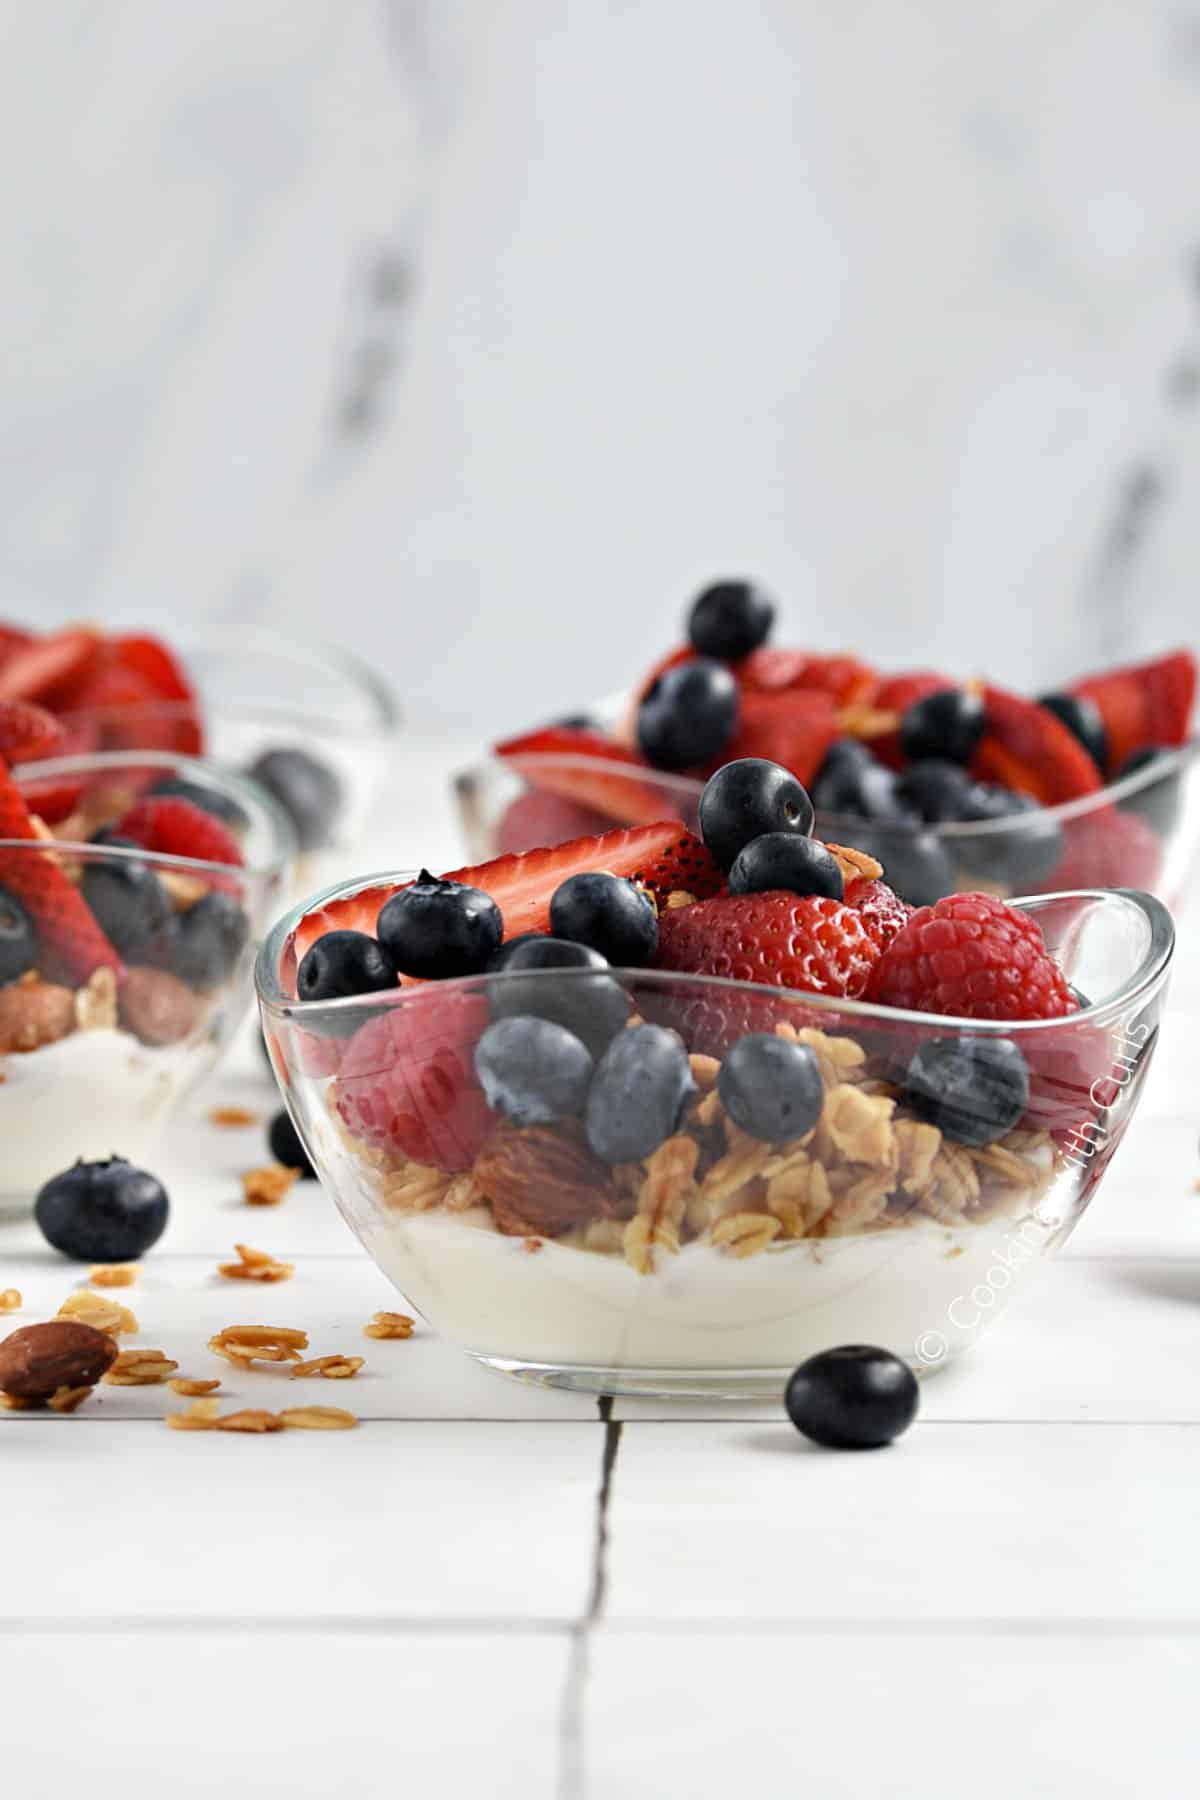 Greek yogurt, granola, fresh raspberries, strawberries and blueberries layered in small glass bowls.